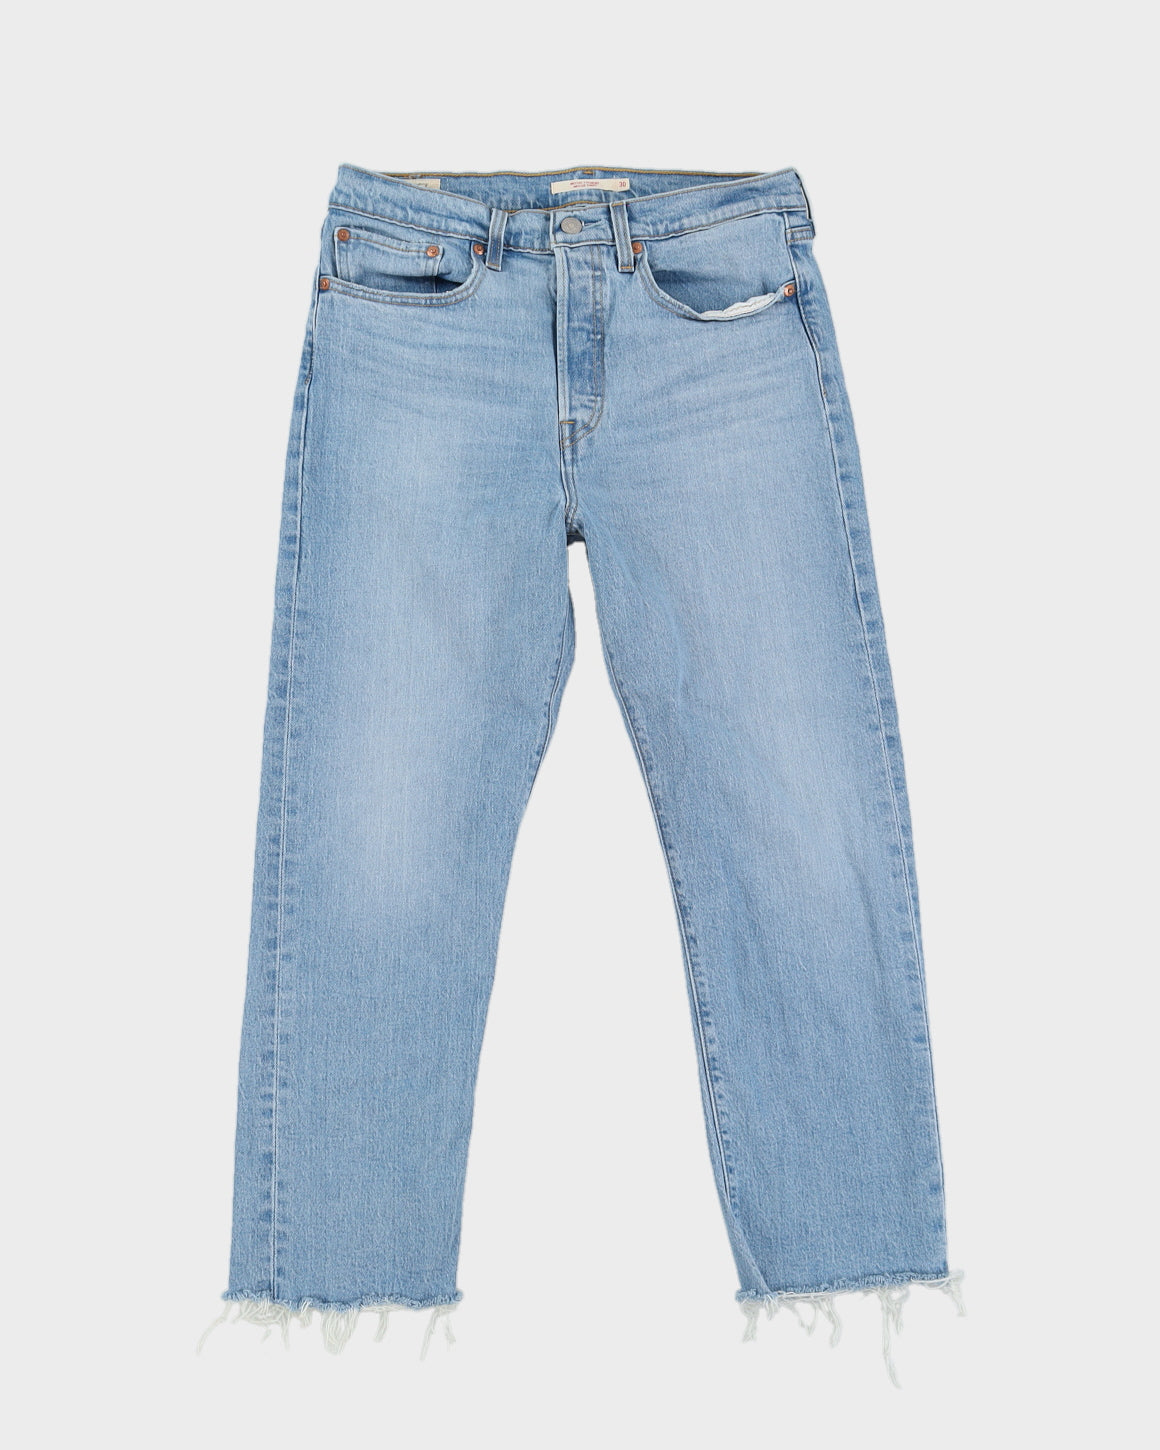 Levi's Big E Repro Blue Jeans - W31 L26